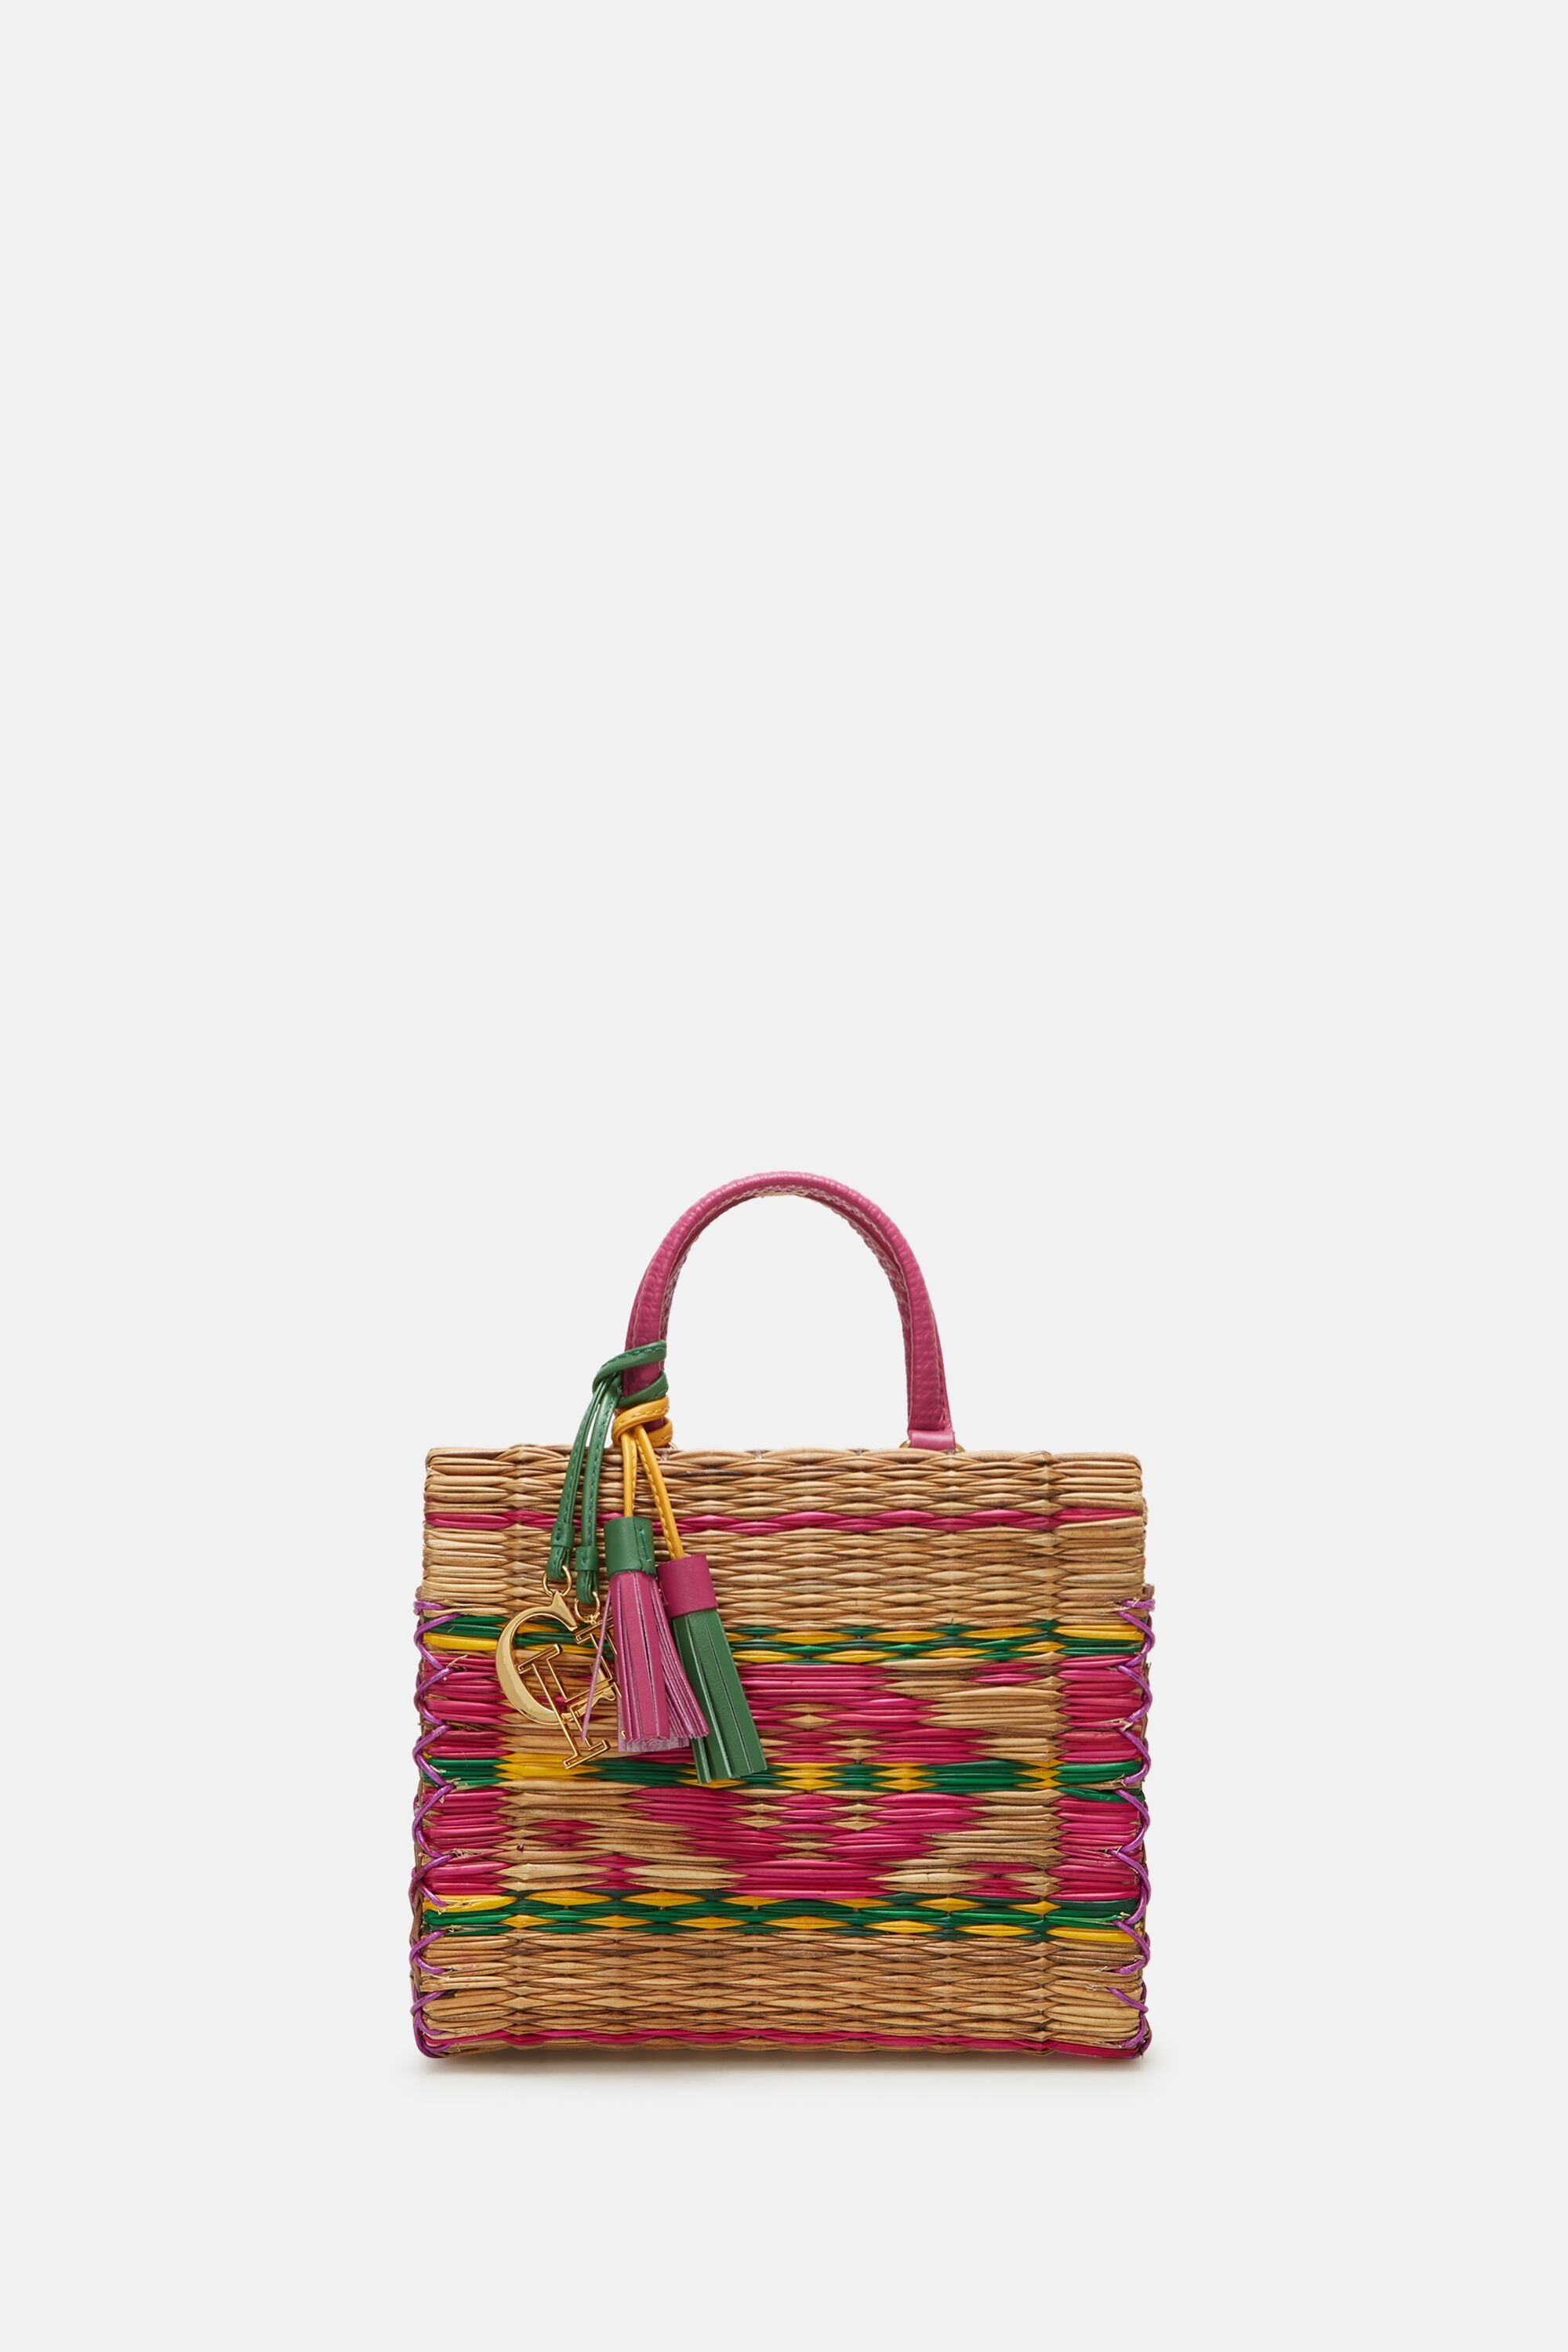 Aveiro | Small handbag